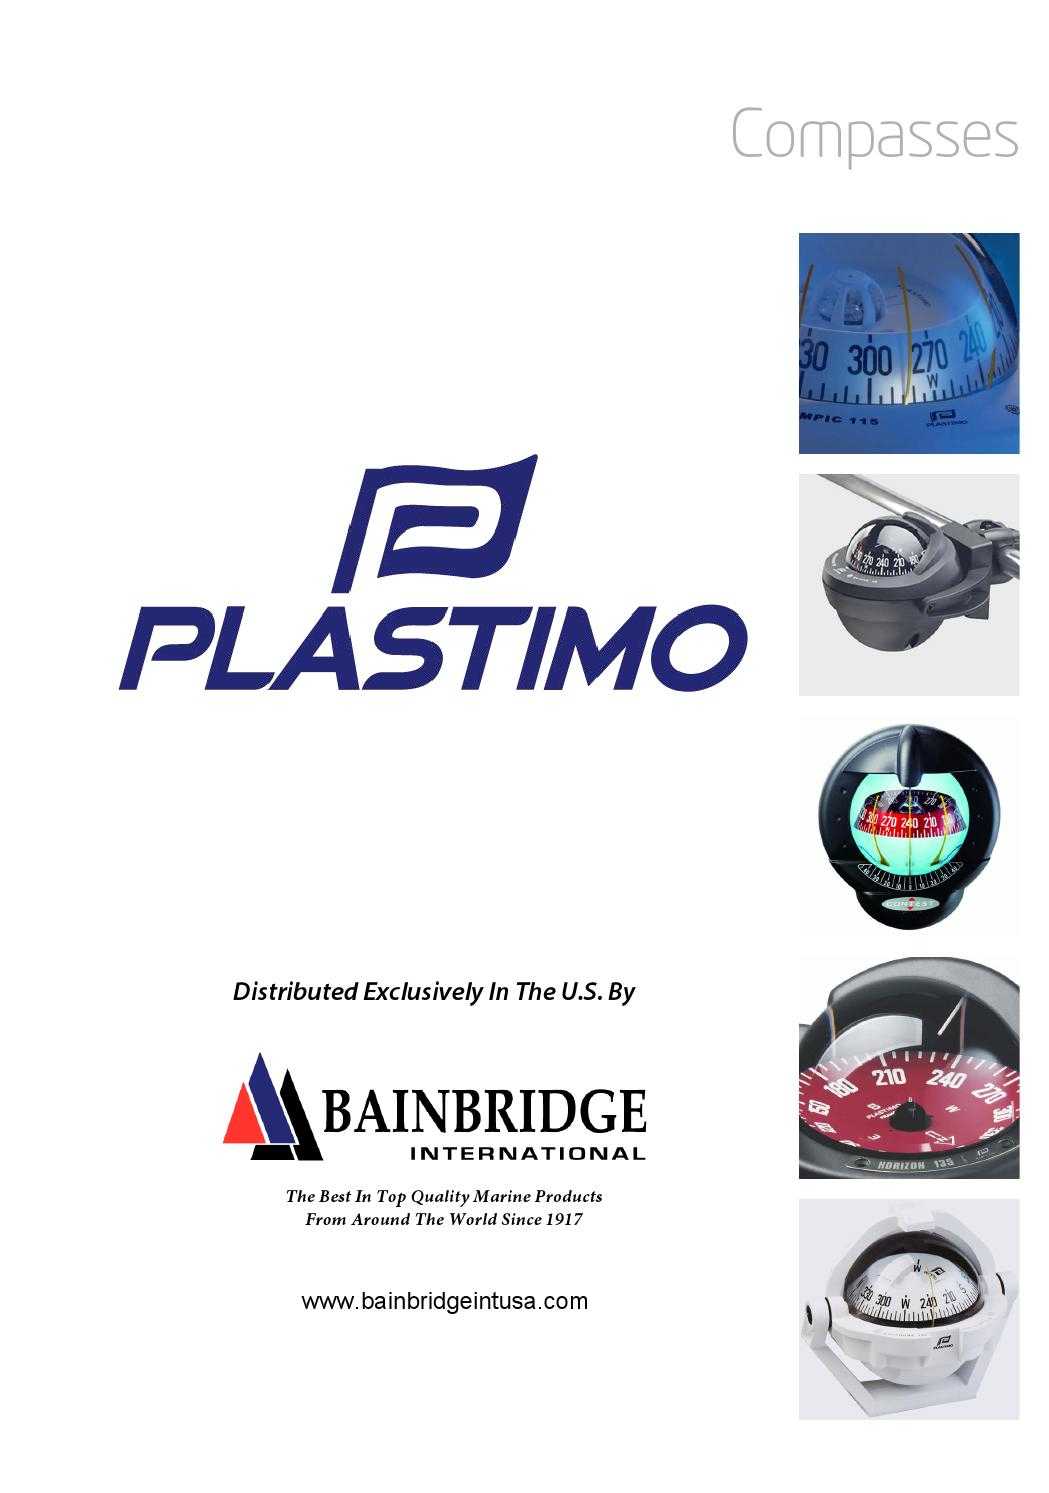 Bi Plastimo Compassbainbridge International – Issuu Intended For Compass Deviation Card Template